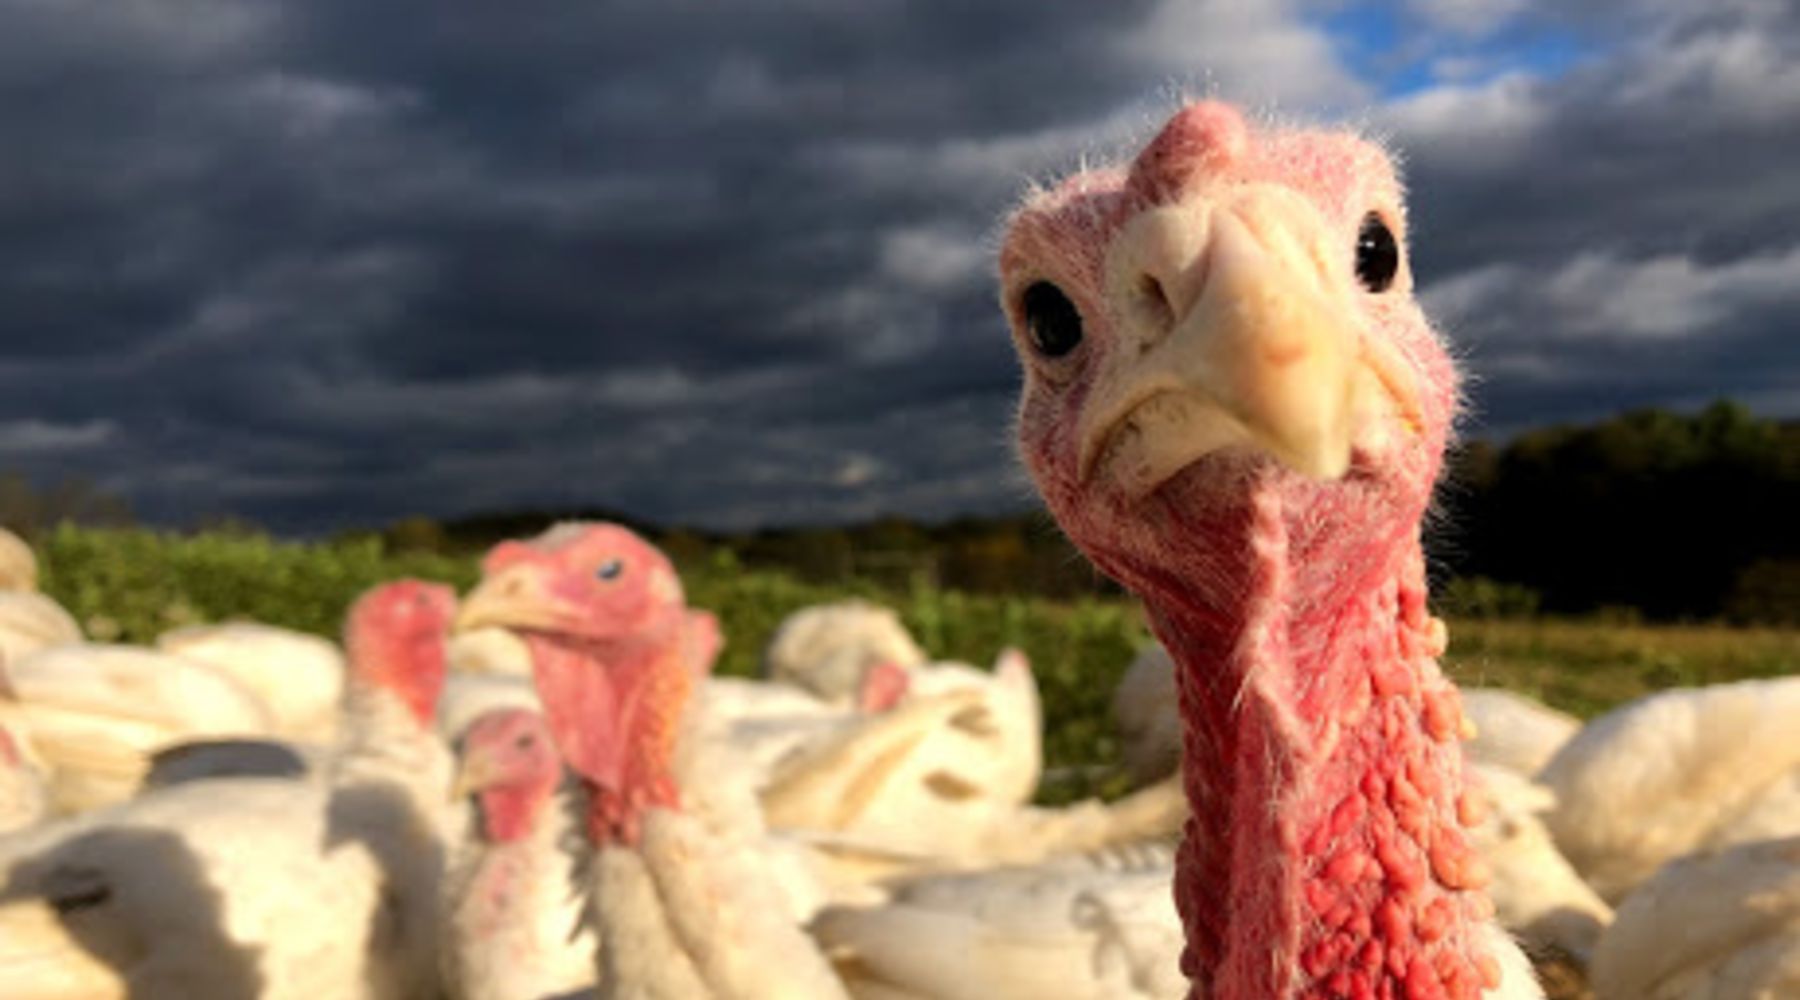 Pasture-raised Turkeys, Sandwiches and Thanksgiving!